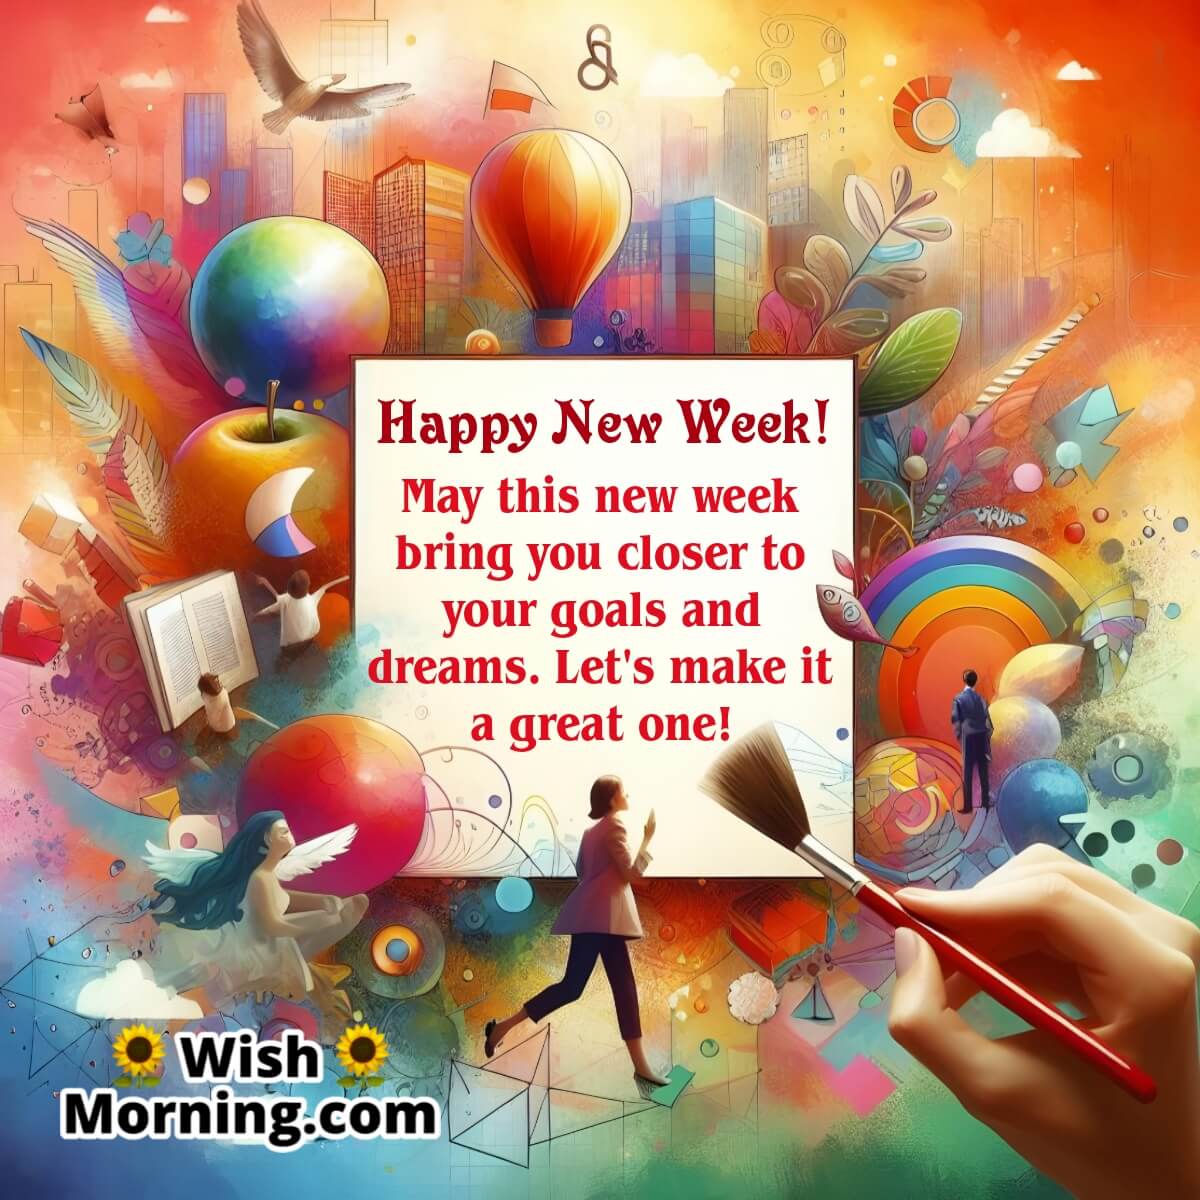 Happy New Week Message